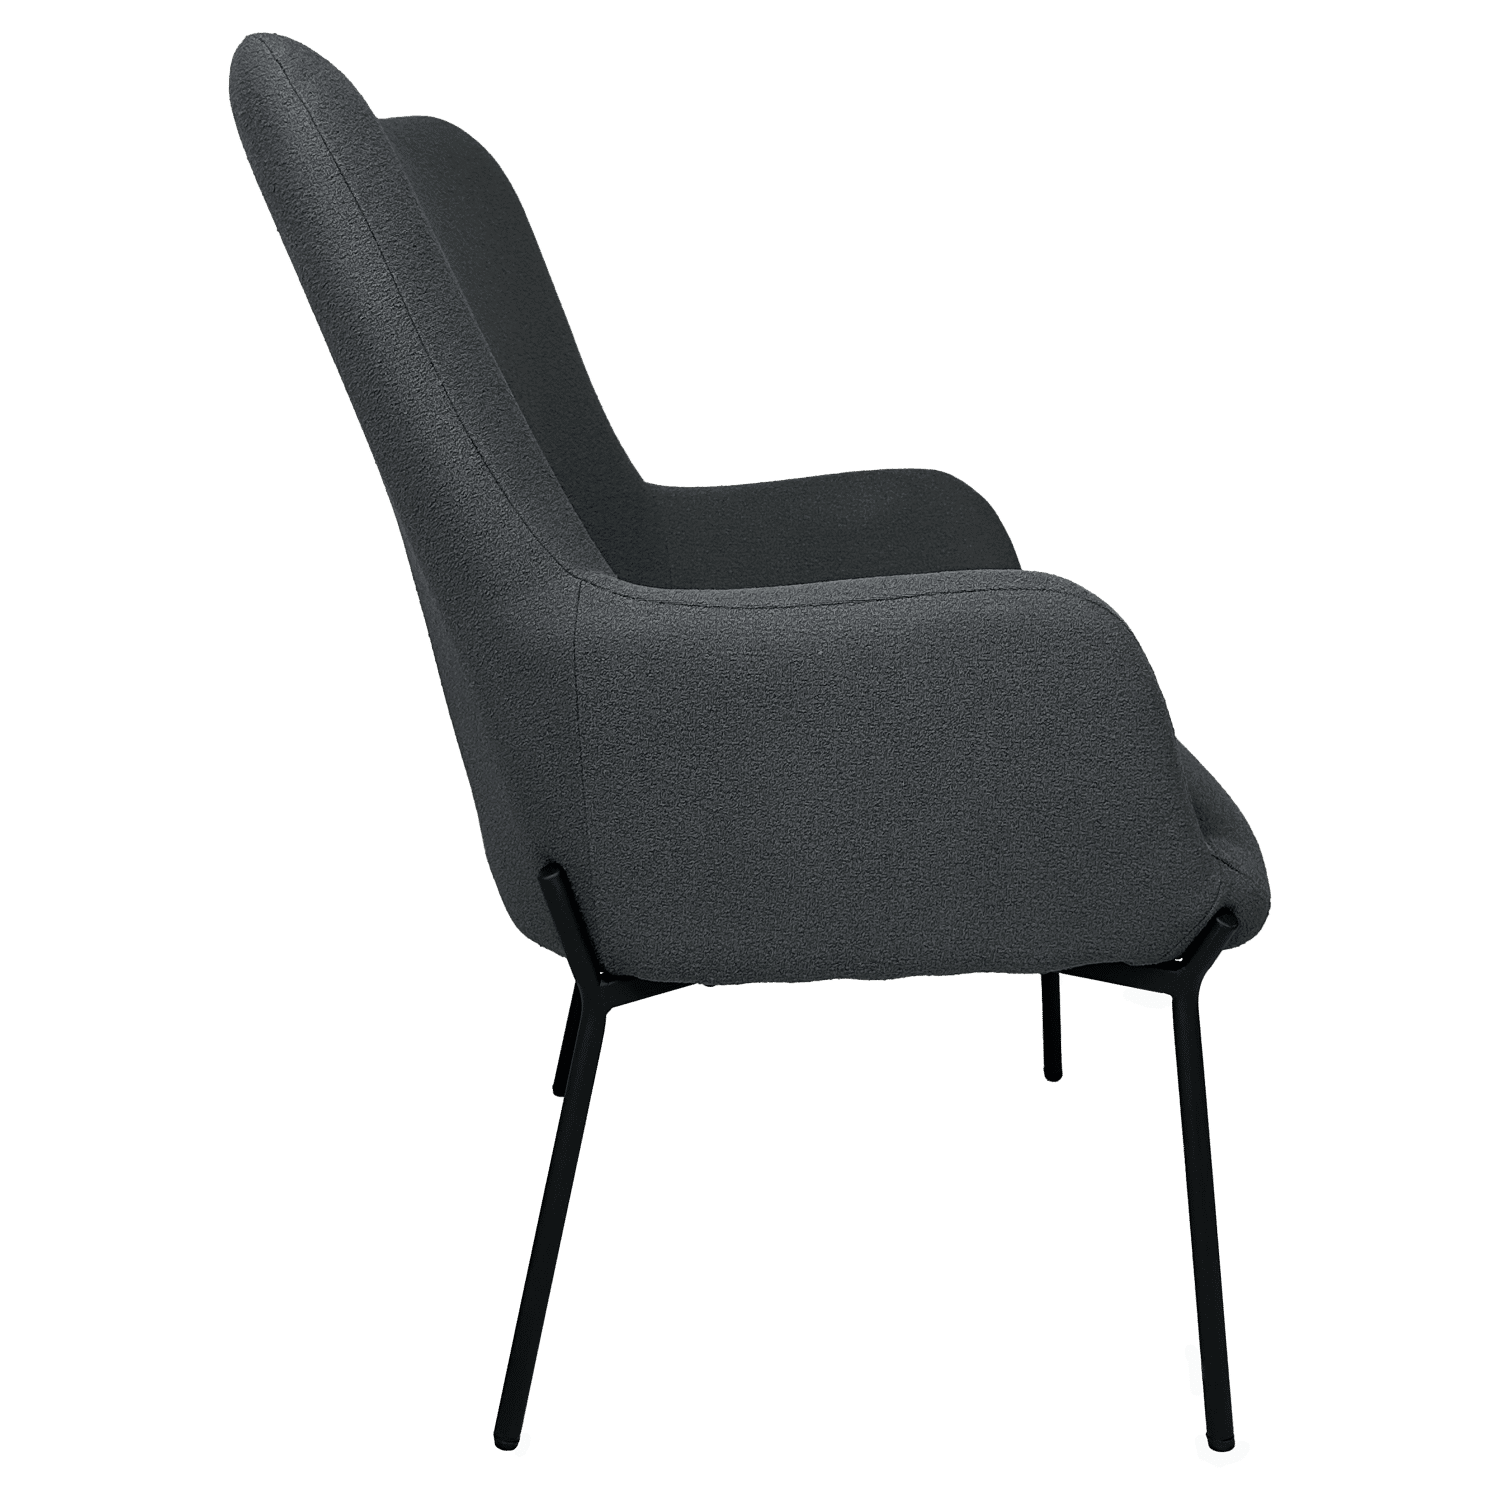 EIRA grijze fauteuil van lusstof